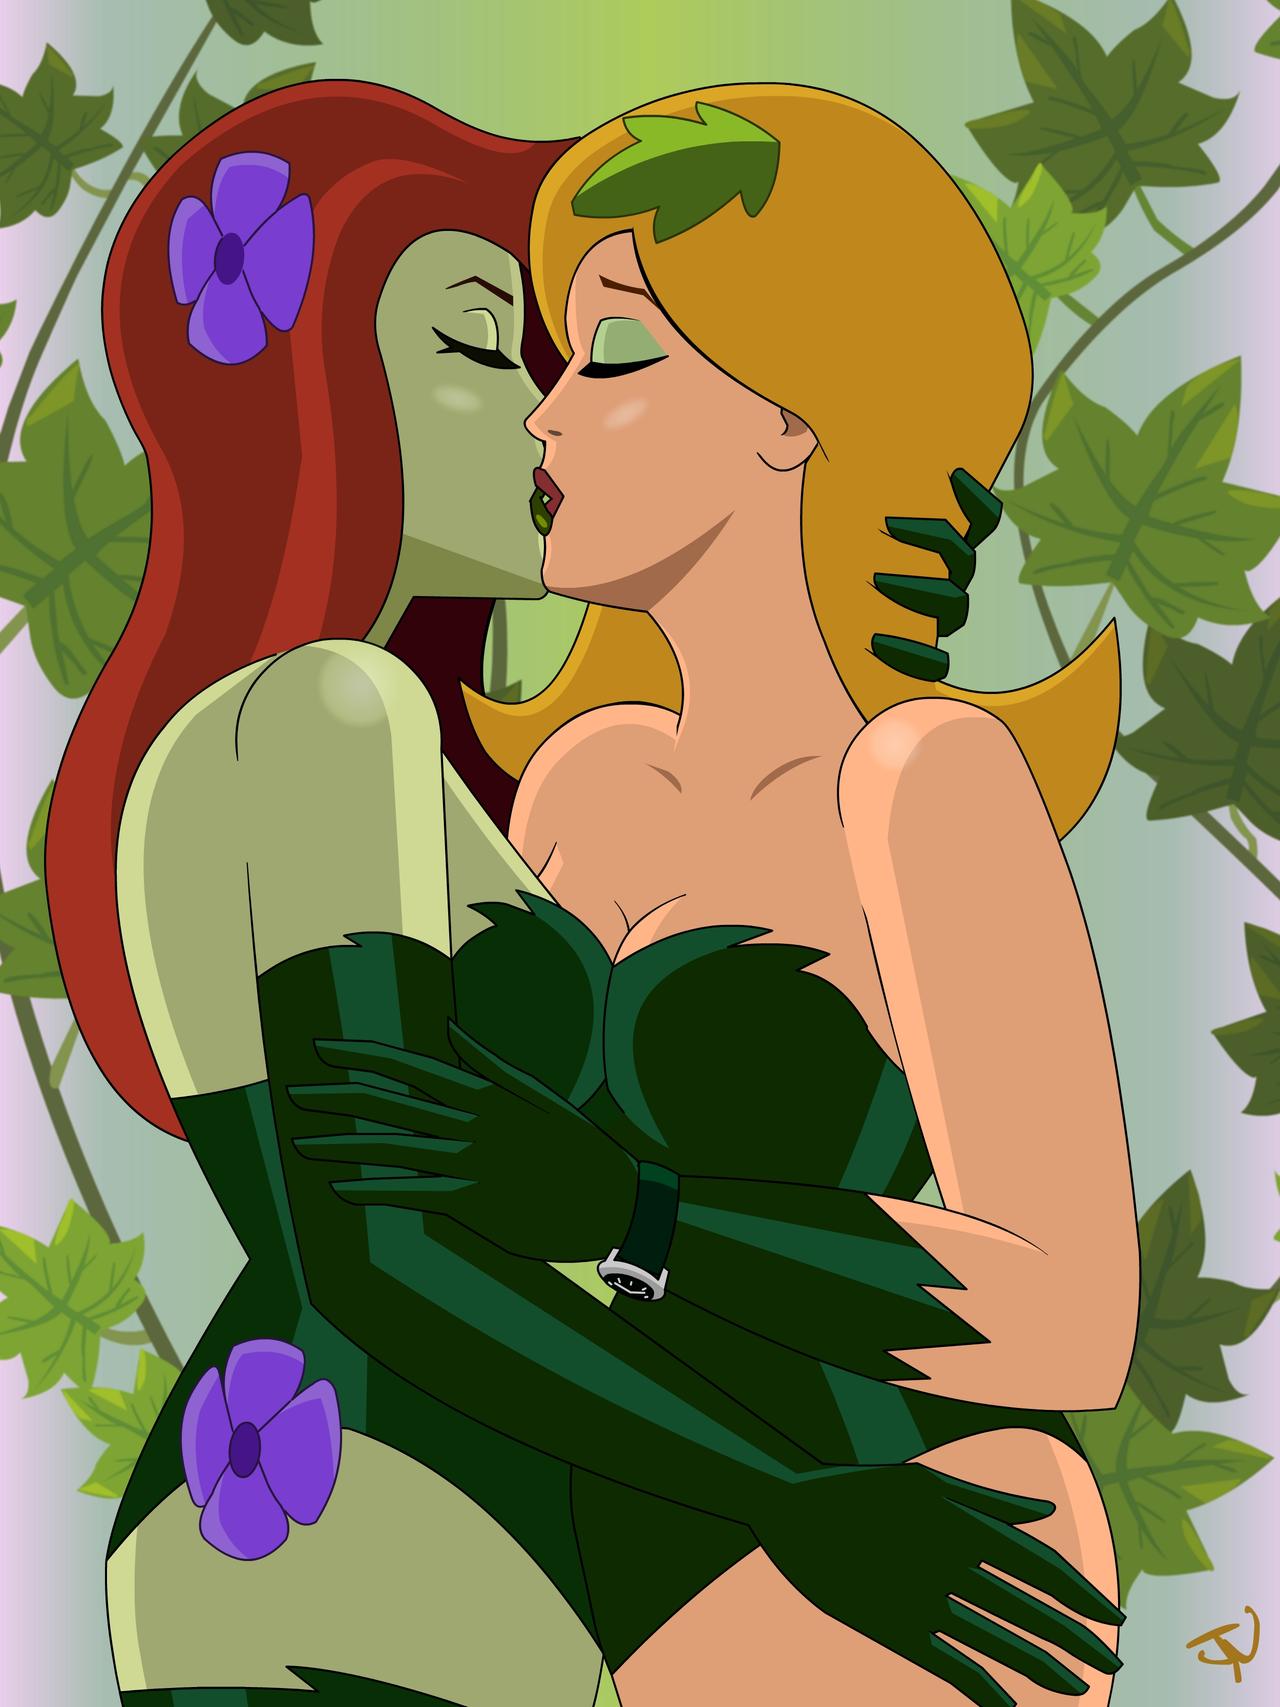 poison_ivy_and_marigold_kiss_by_jettmanas_ddhbd67-fullview.jpg